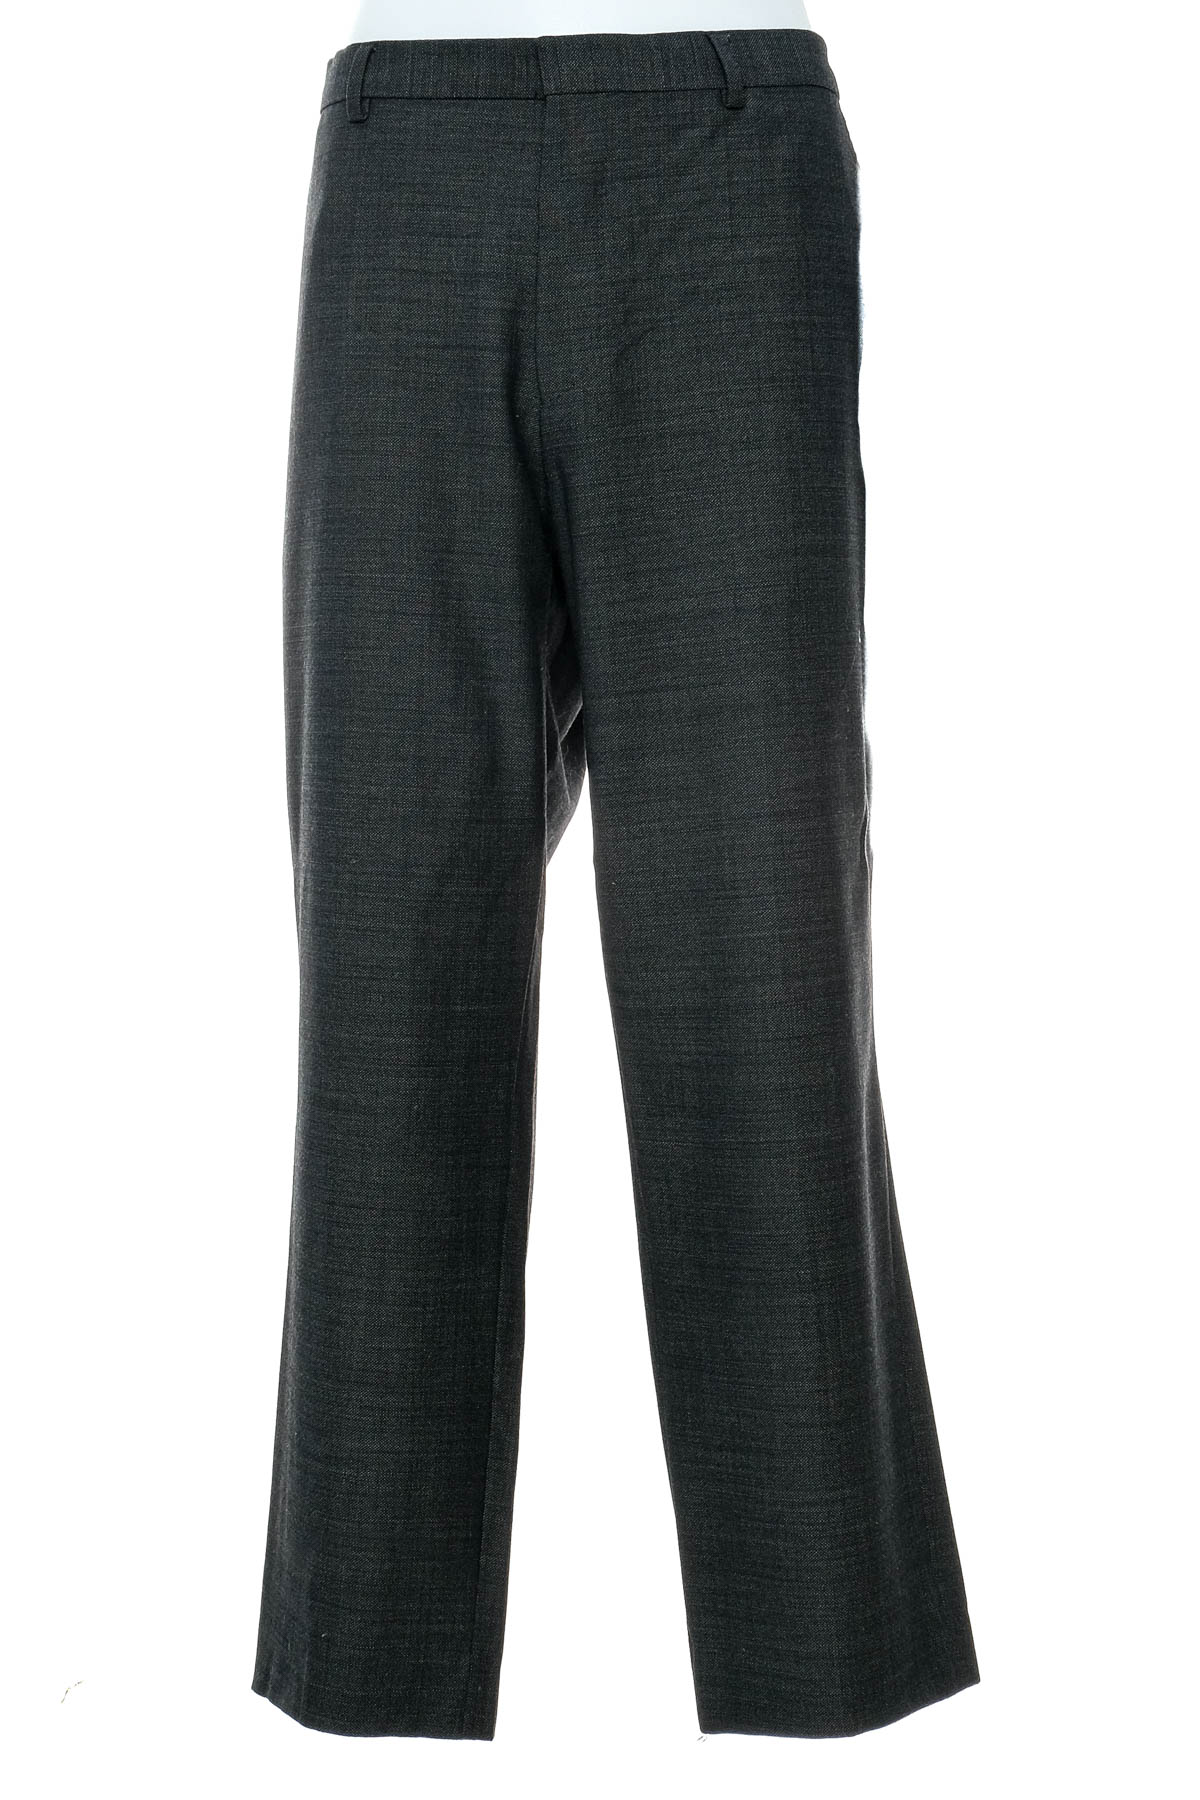 Pantalon pentru bărbați - BOSS - 0